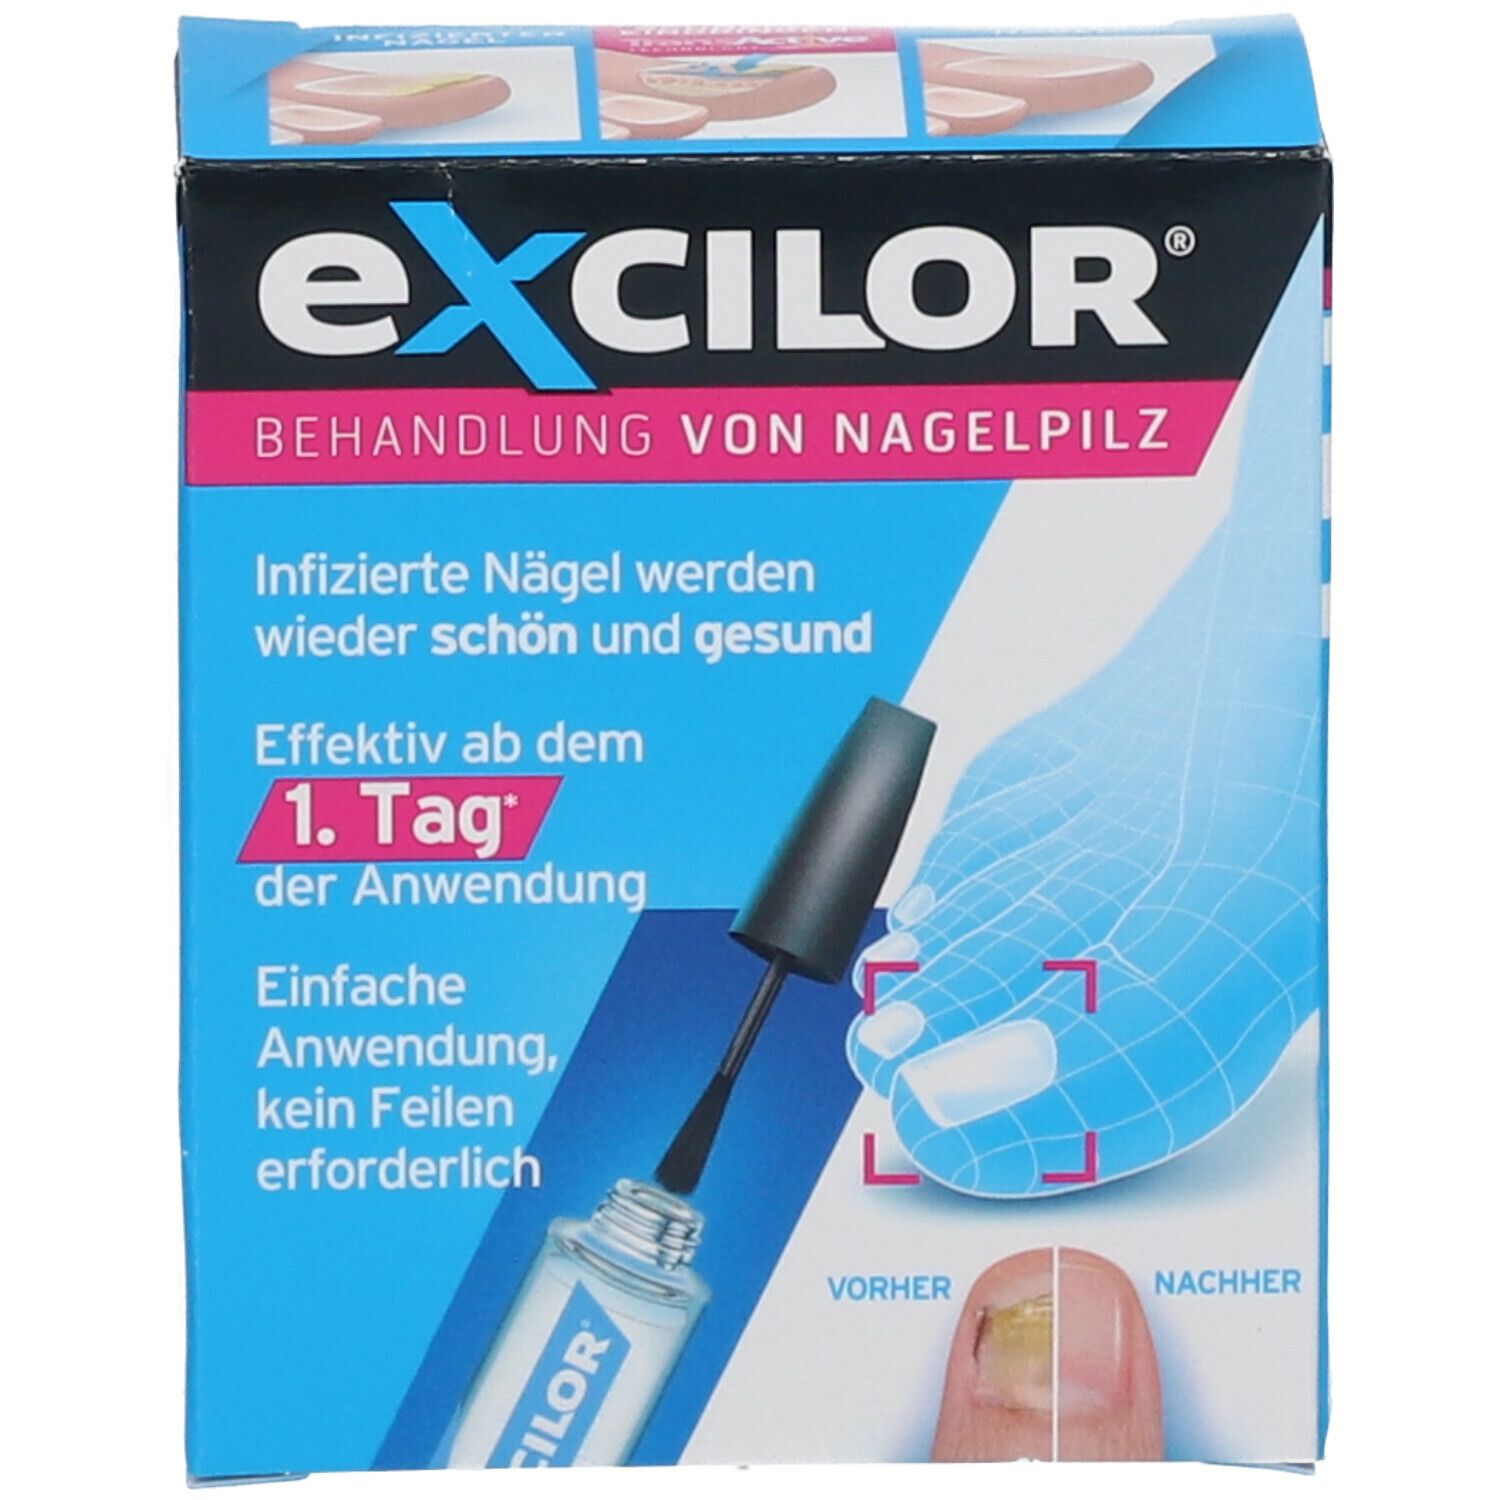 excilor® Nagelpilz-Lösung